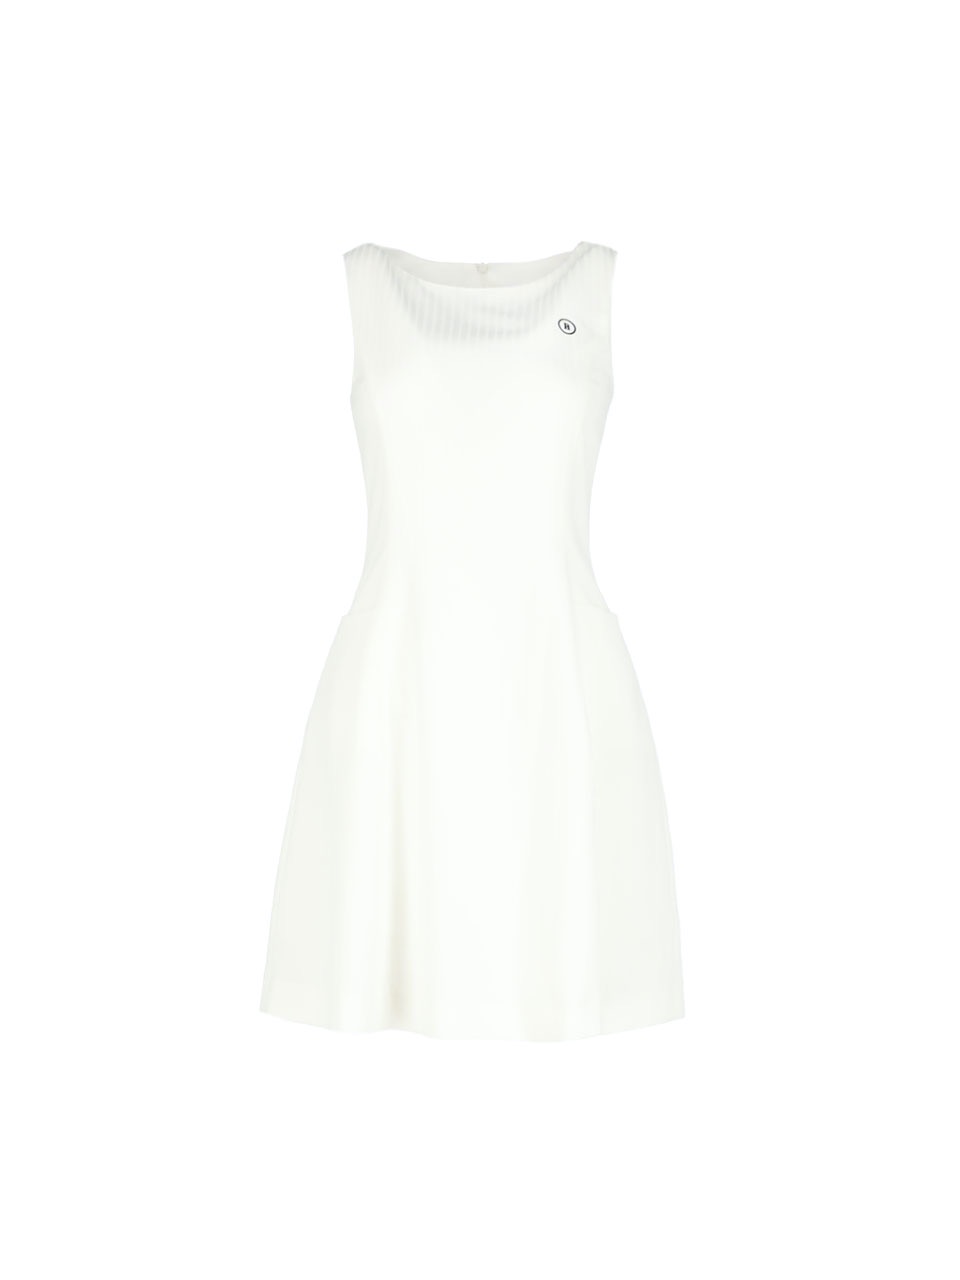 Tennis Sleeveless Mini Dress (White)